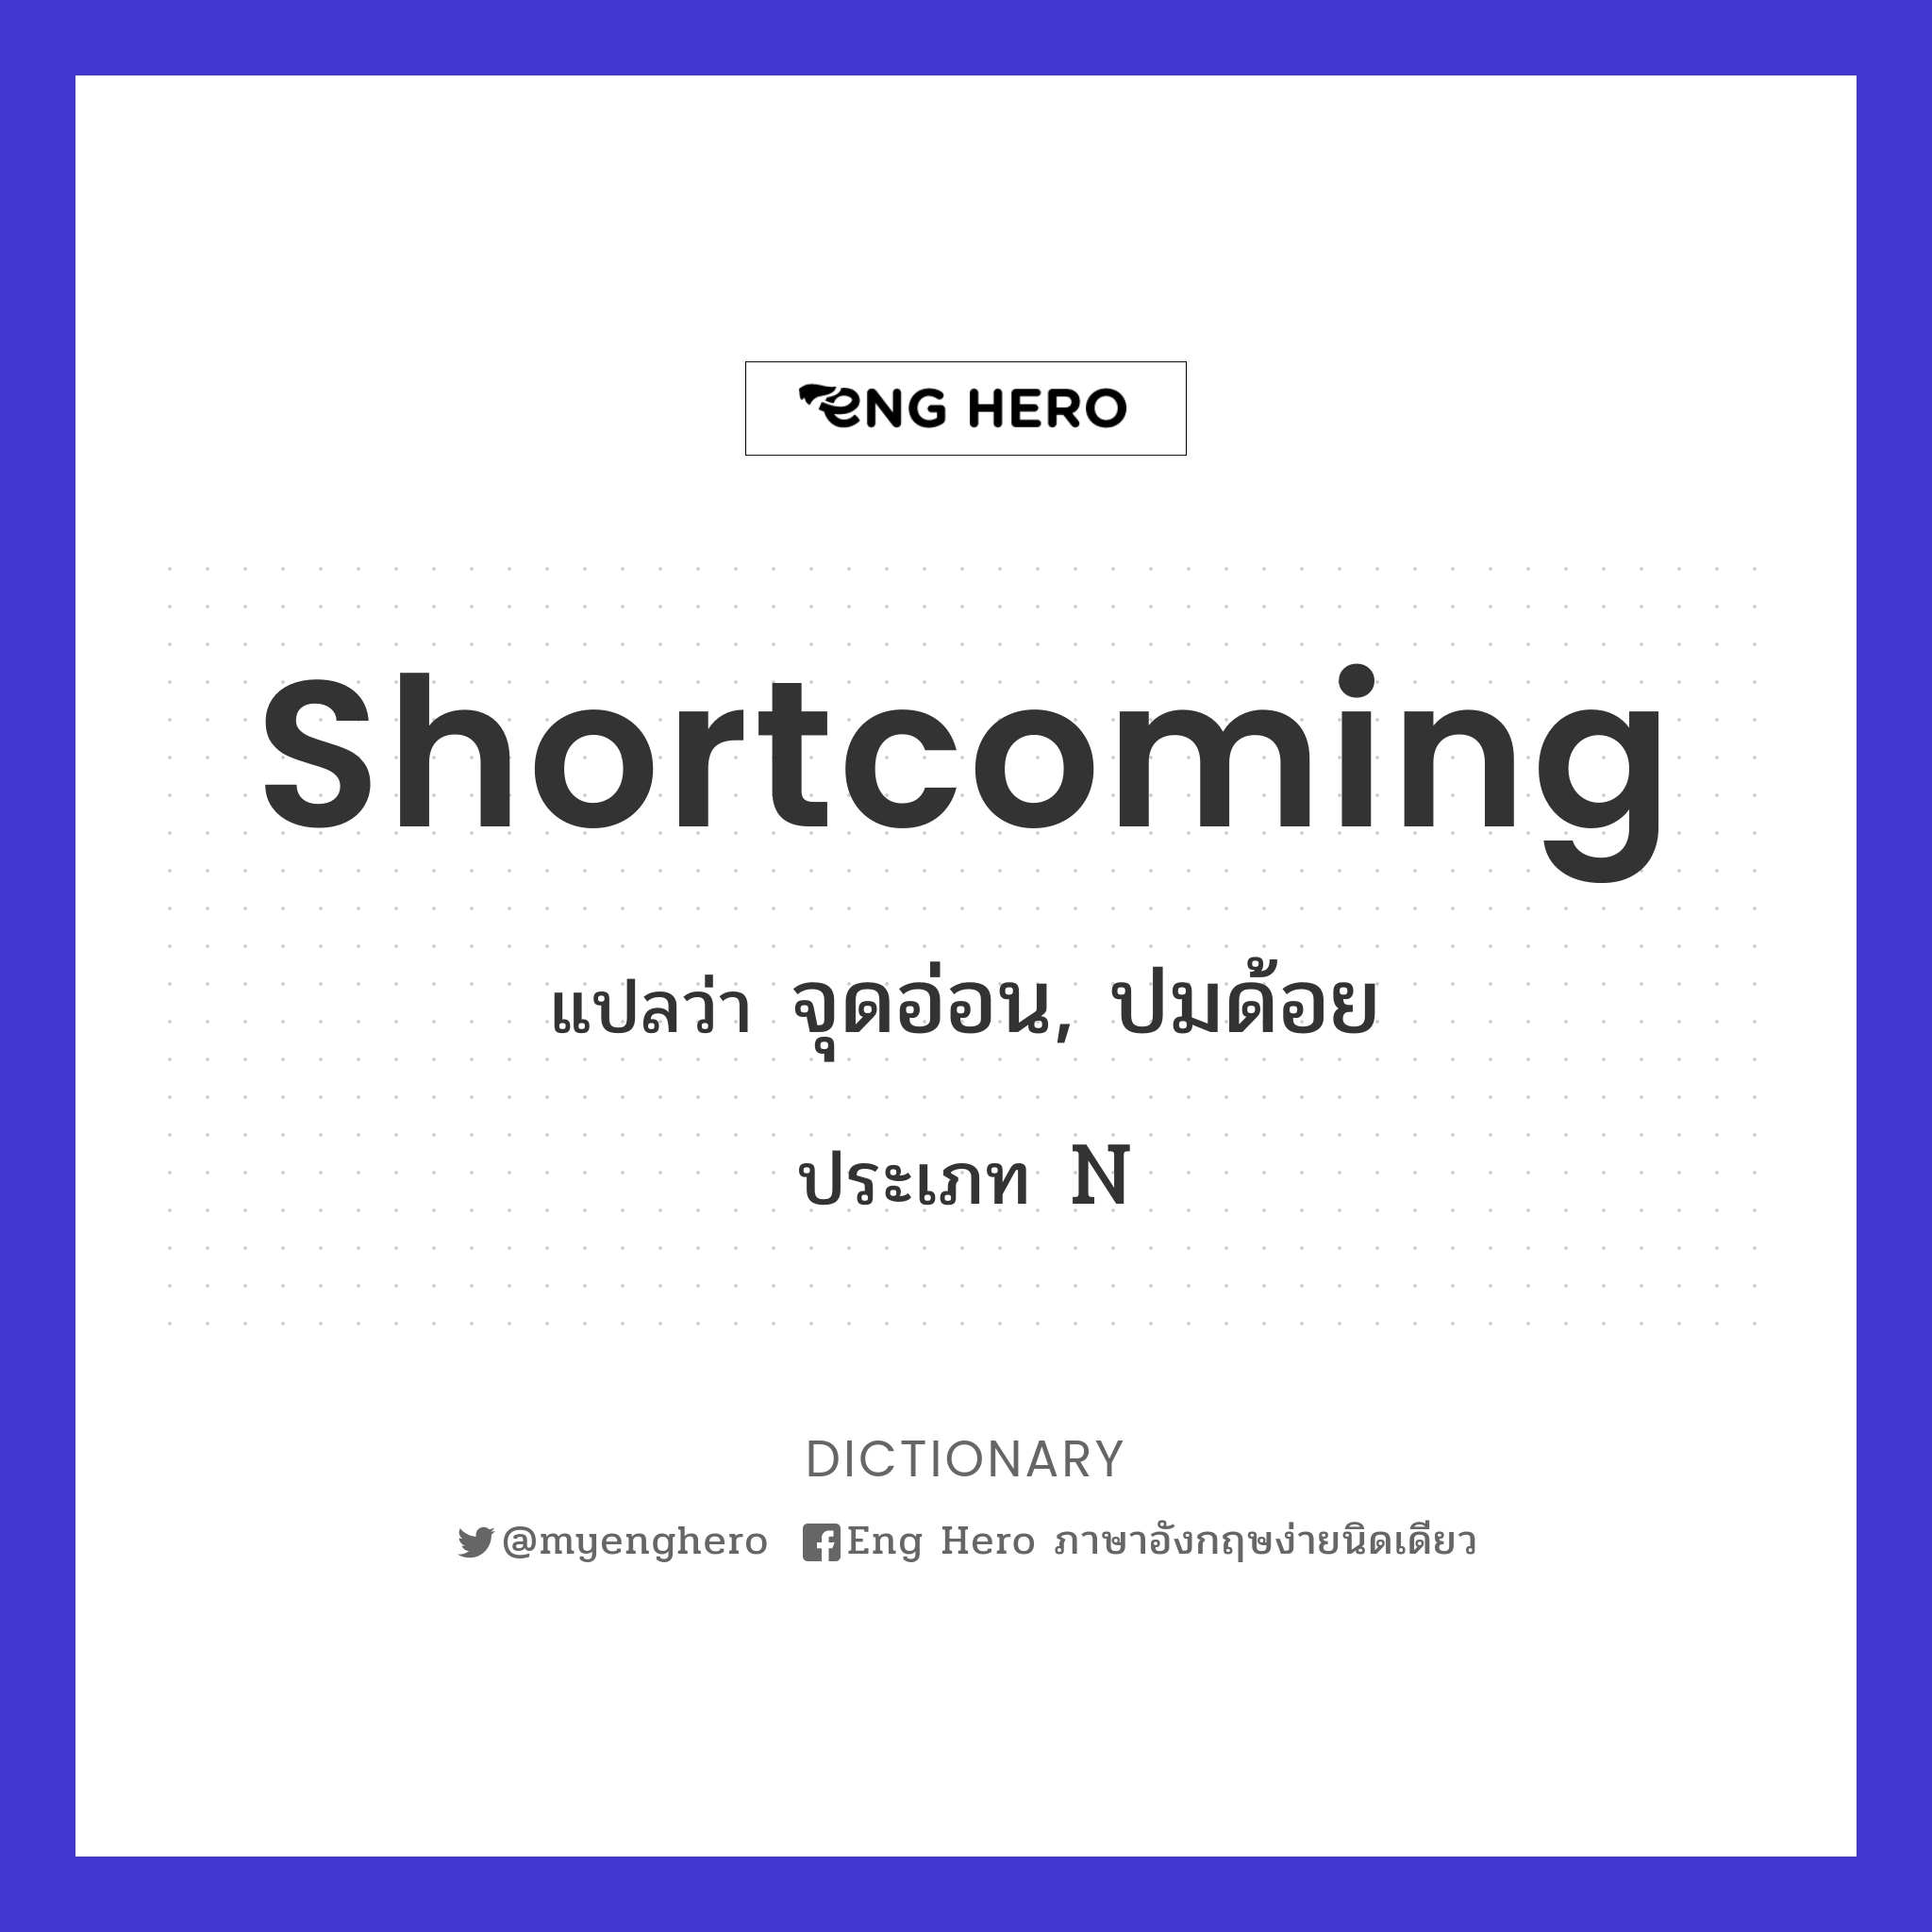 shortcoming